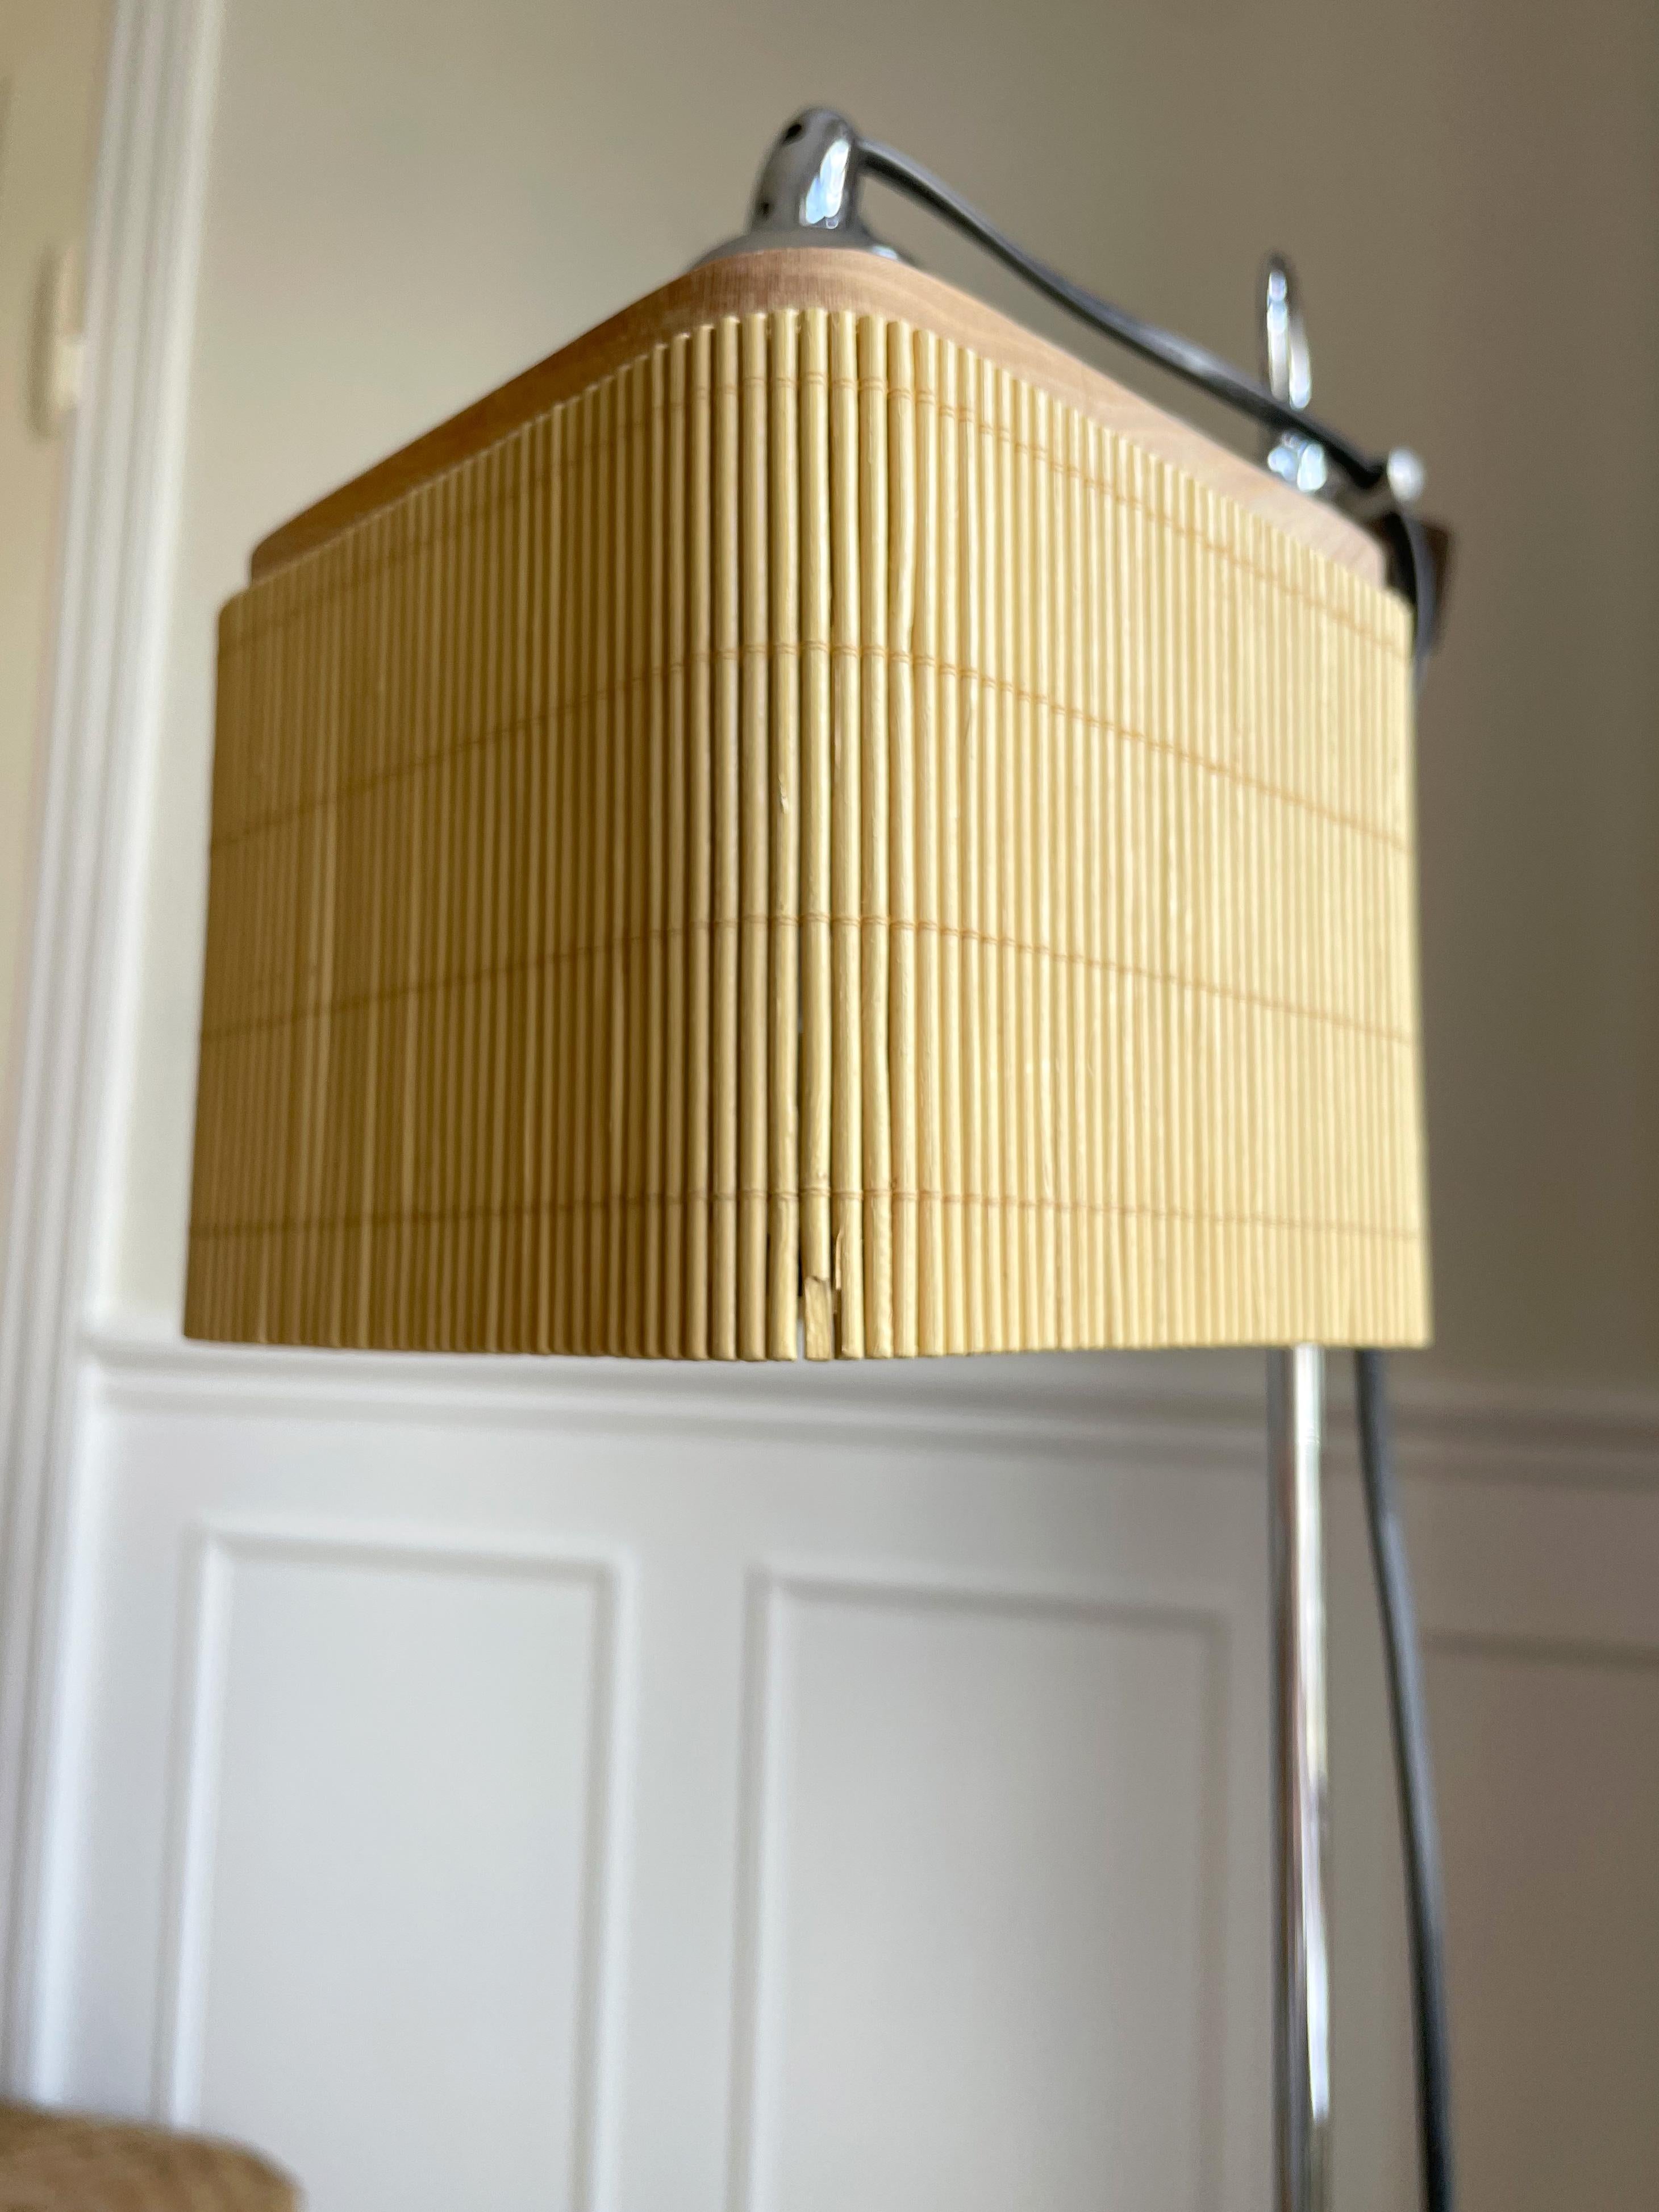 Adjustable Spanish Modernist Floor Lamp, Chrome, Wood, Rattan, 2010s For Sale 6